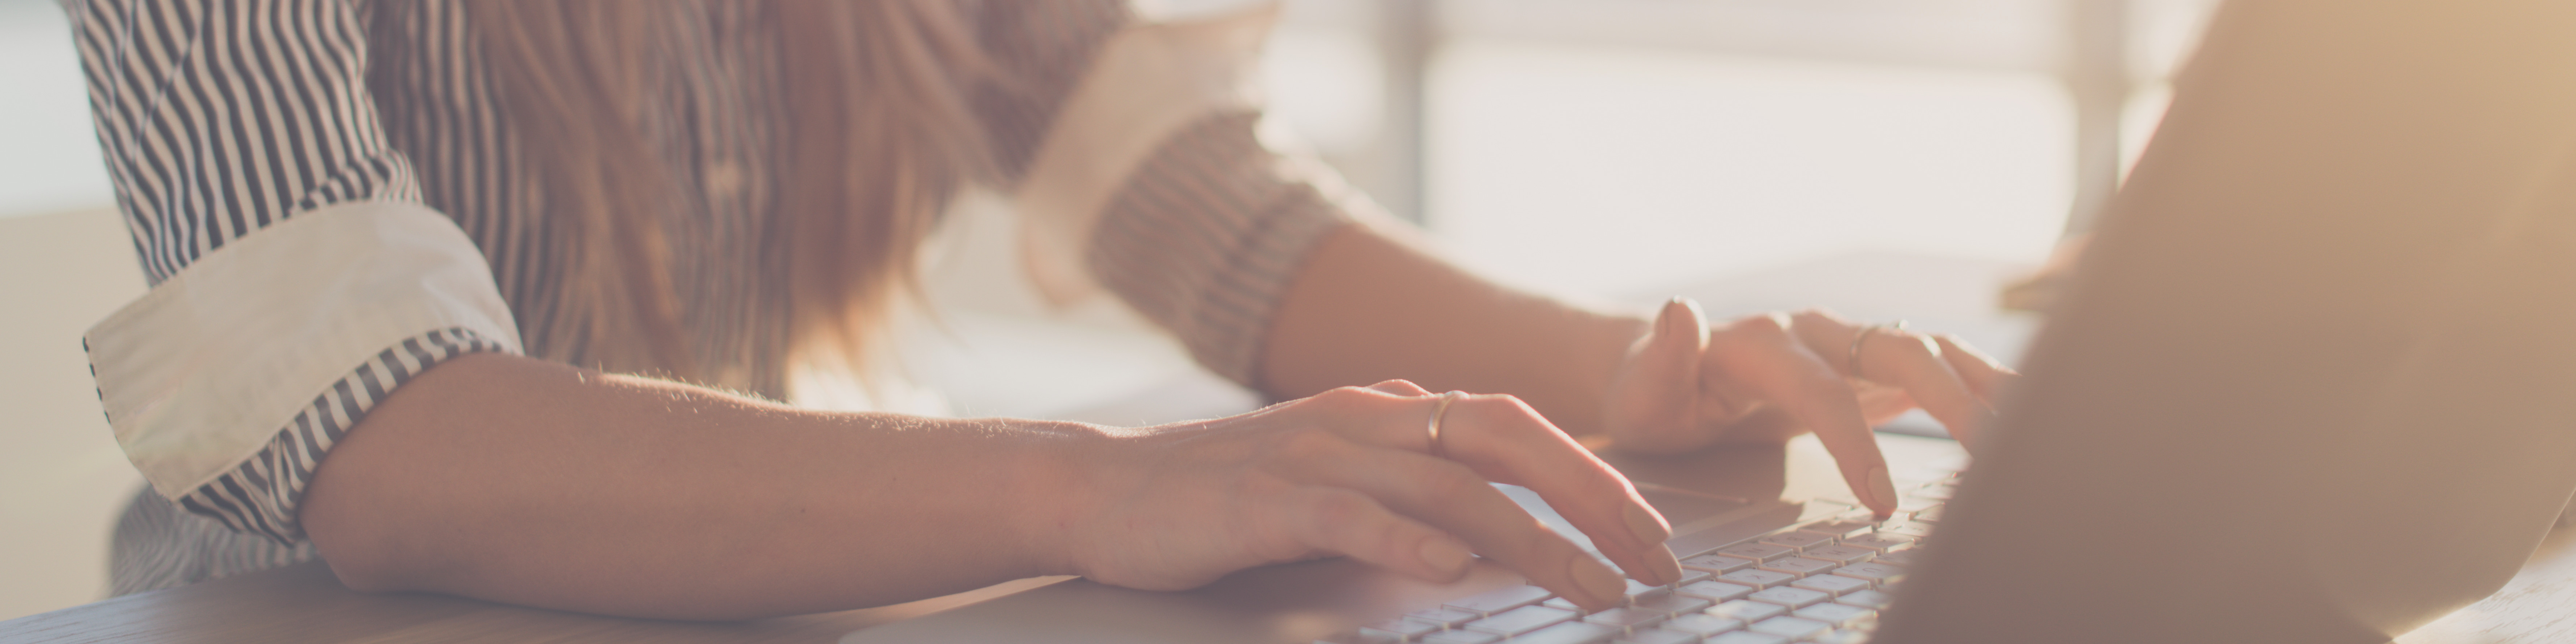 woman typing on laptop writing Financial Advisor Blog vermont